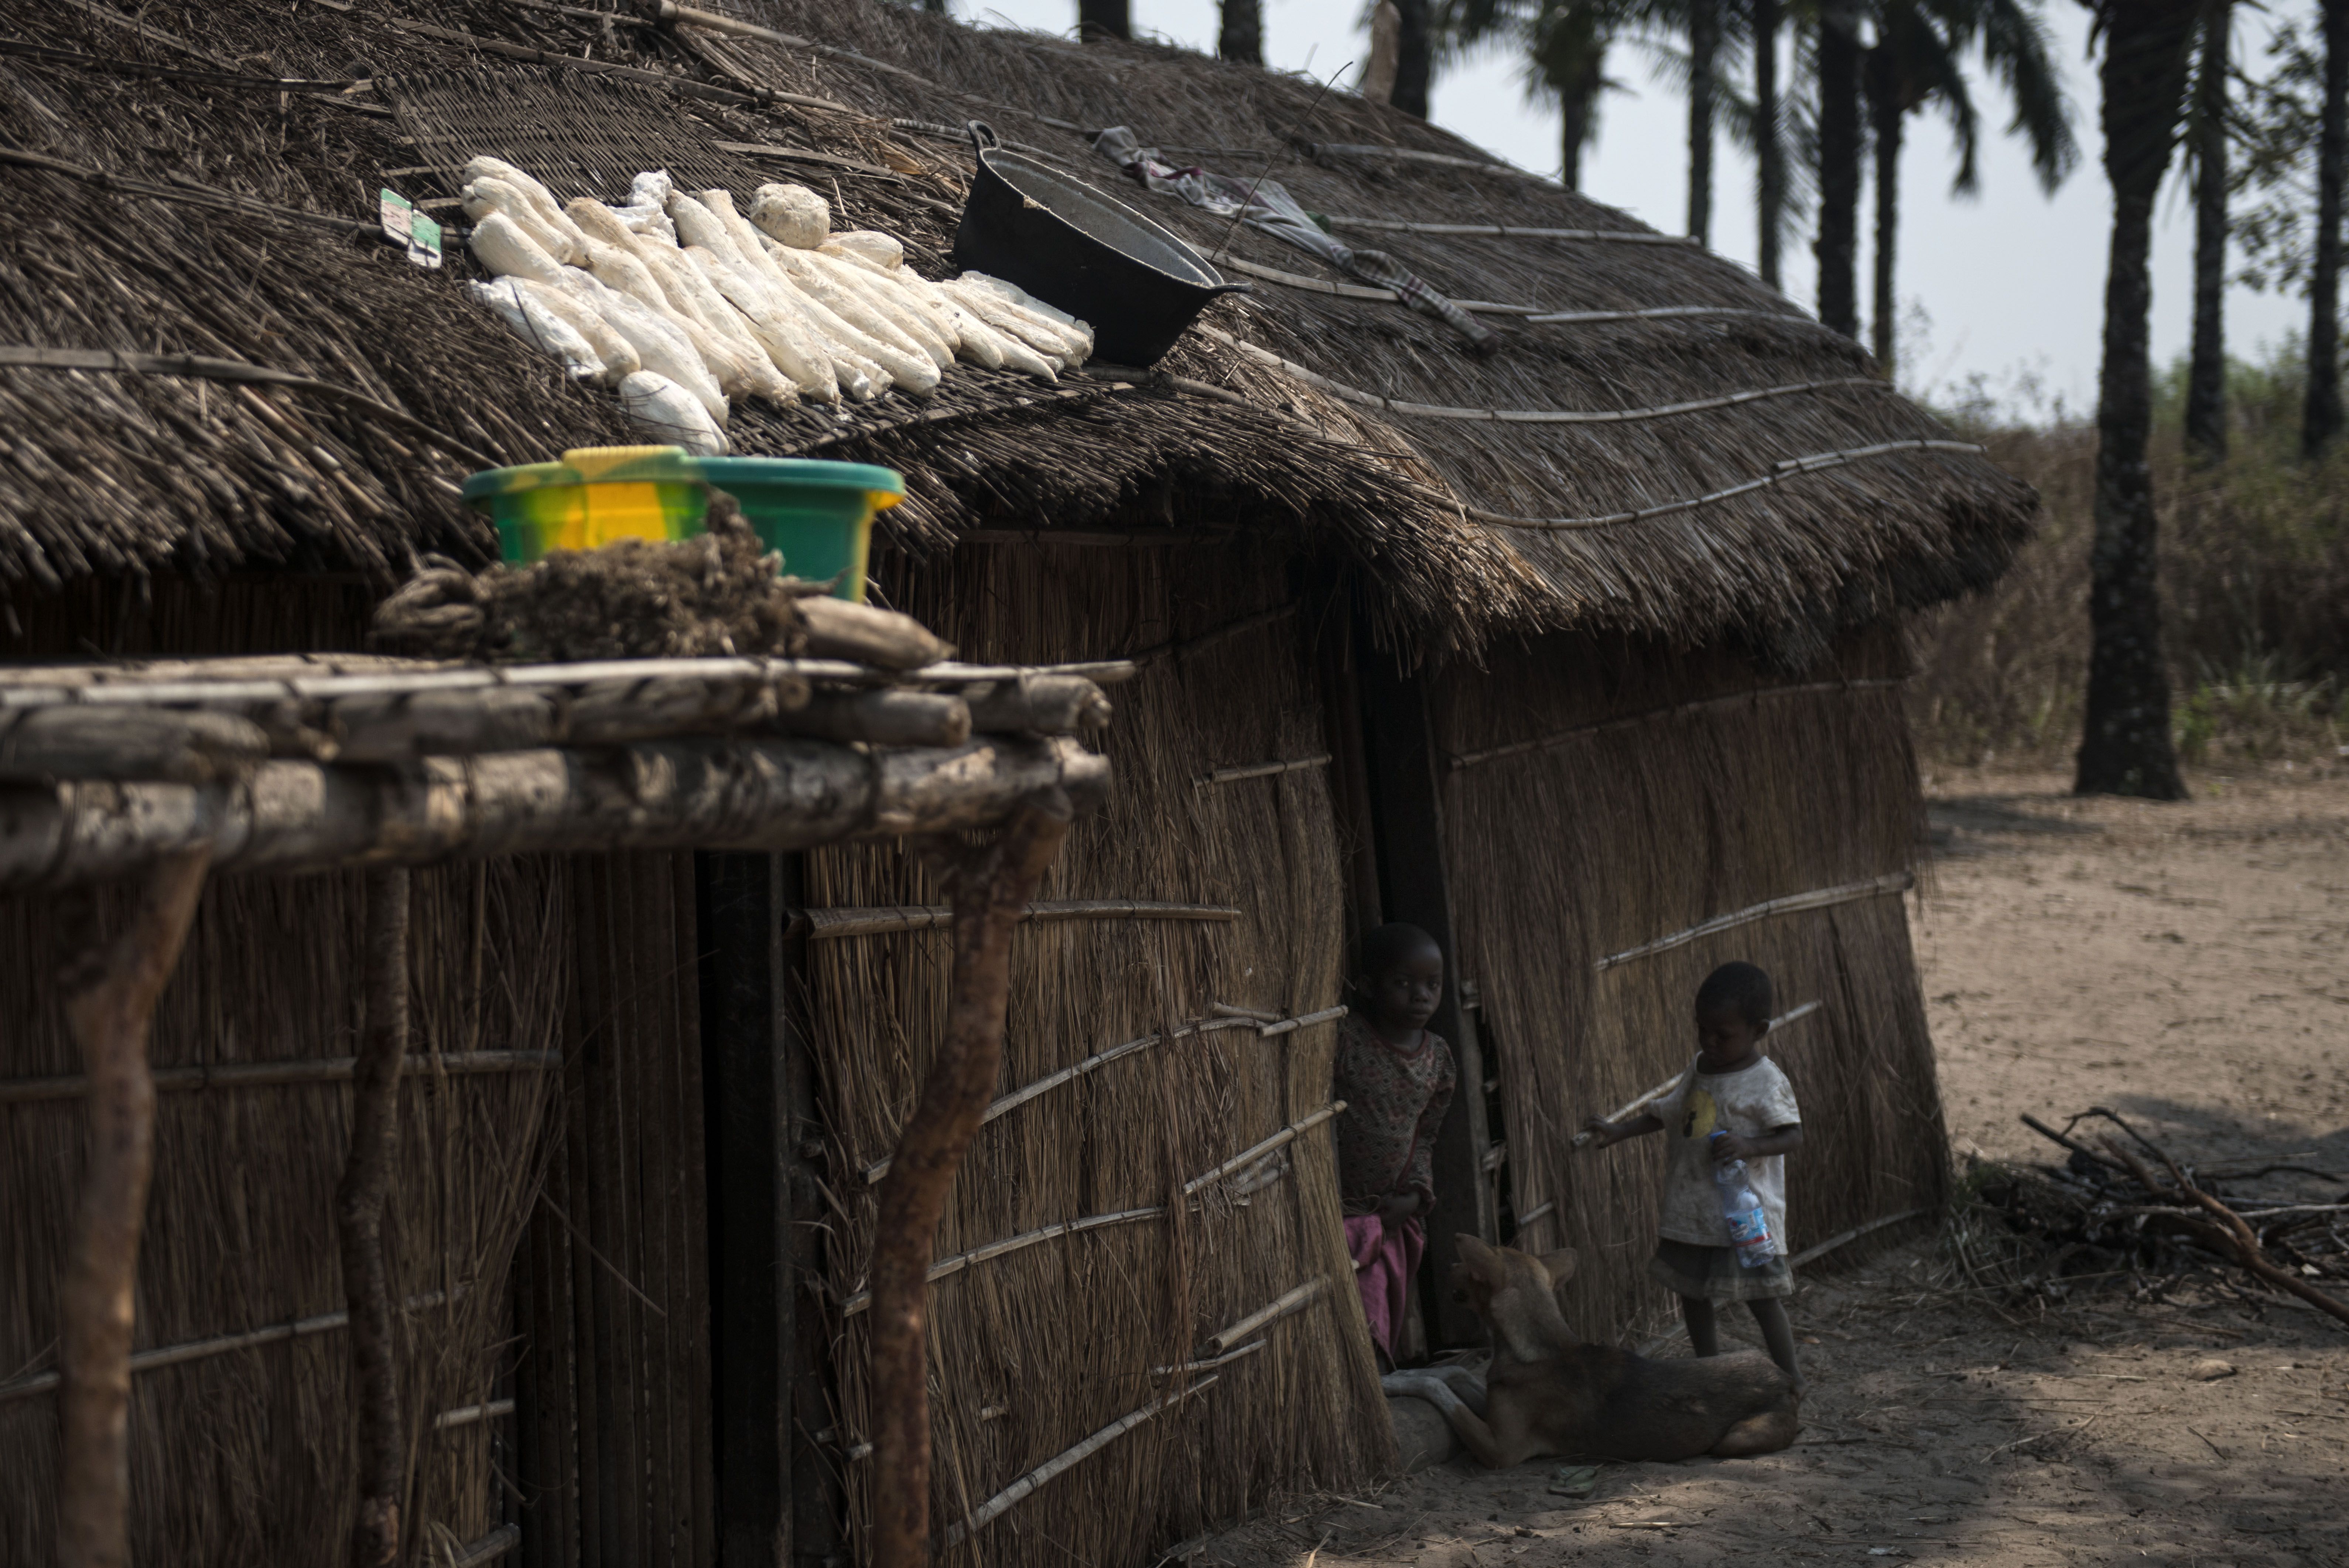 Image by Neil Brandvold. Democratic Republic of Congo, 2016.